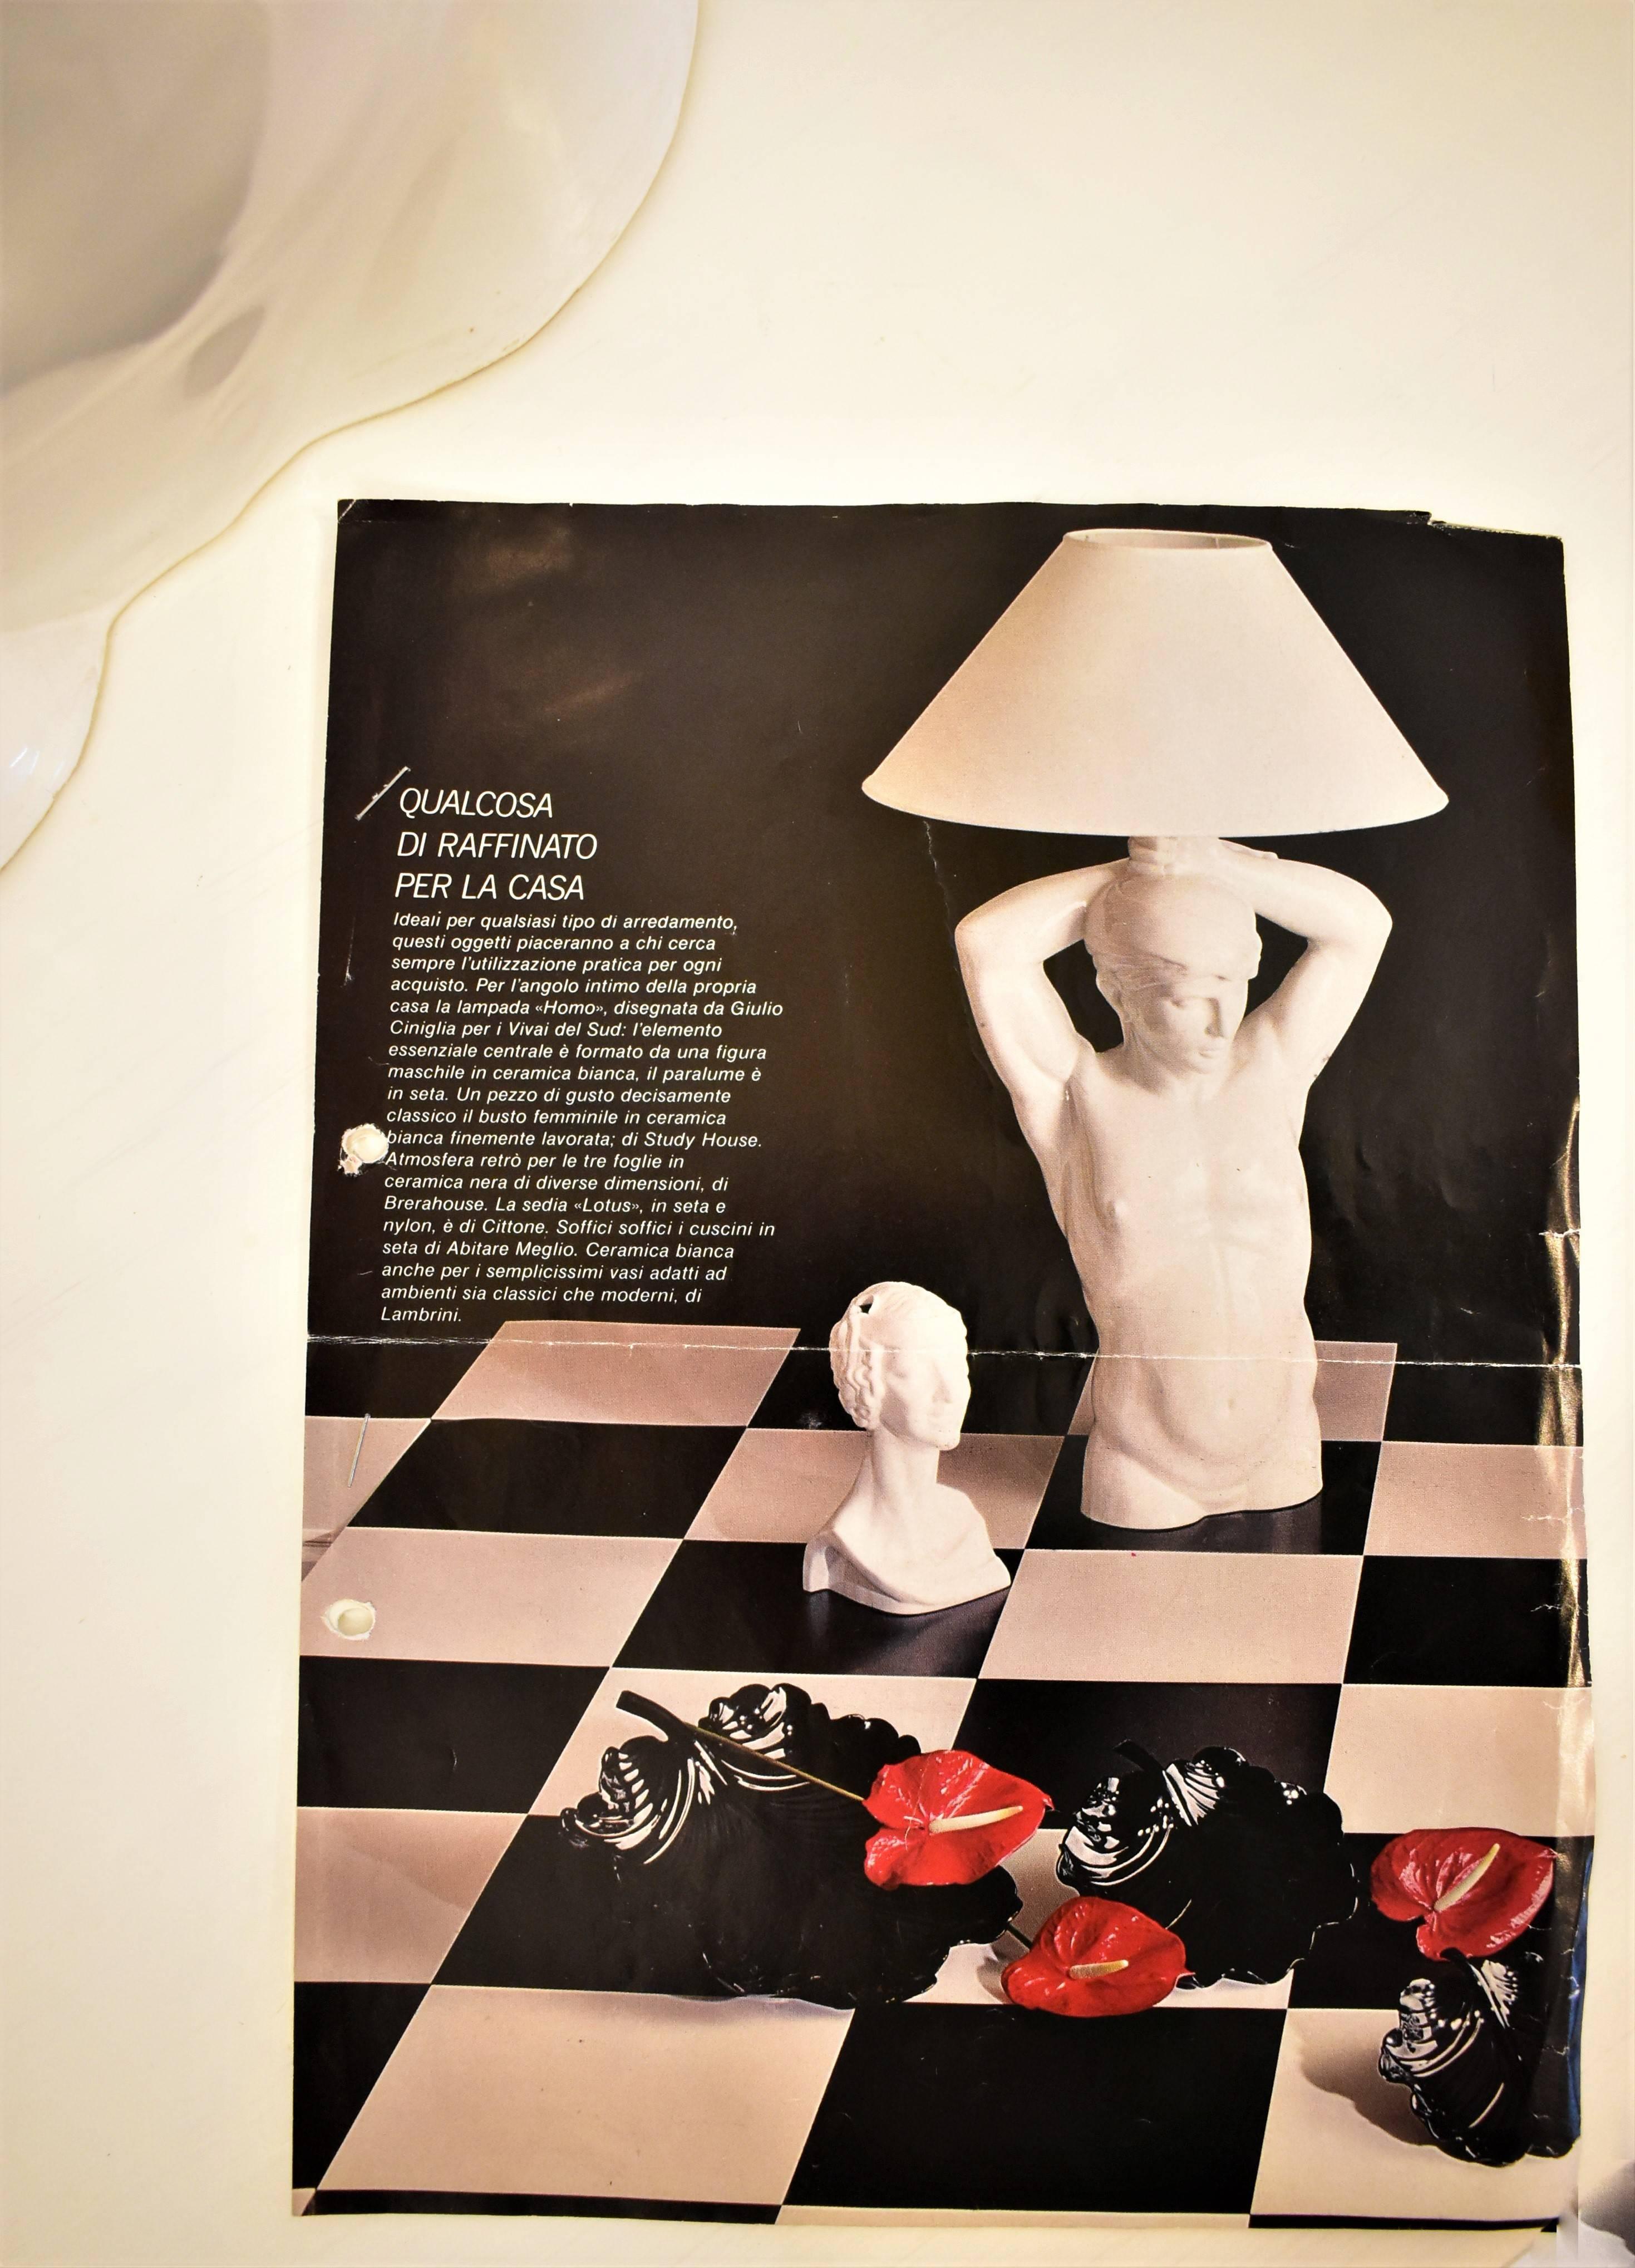 Glazed Giulio Ciniglia Sculpture, a Large Torso of a Nude Man in White Ceramic, Lamp For Sale